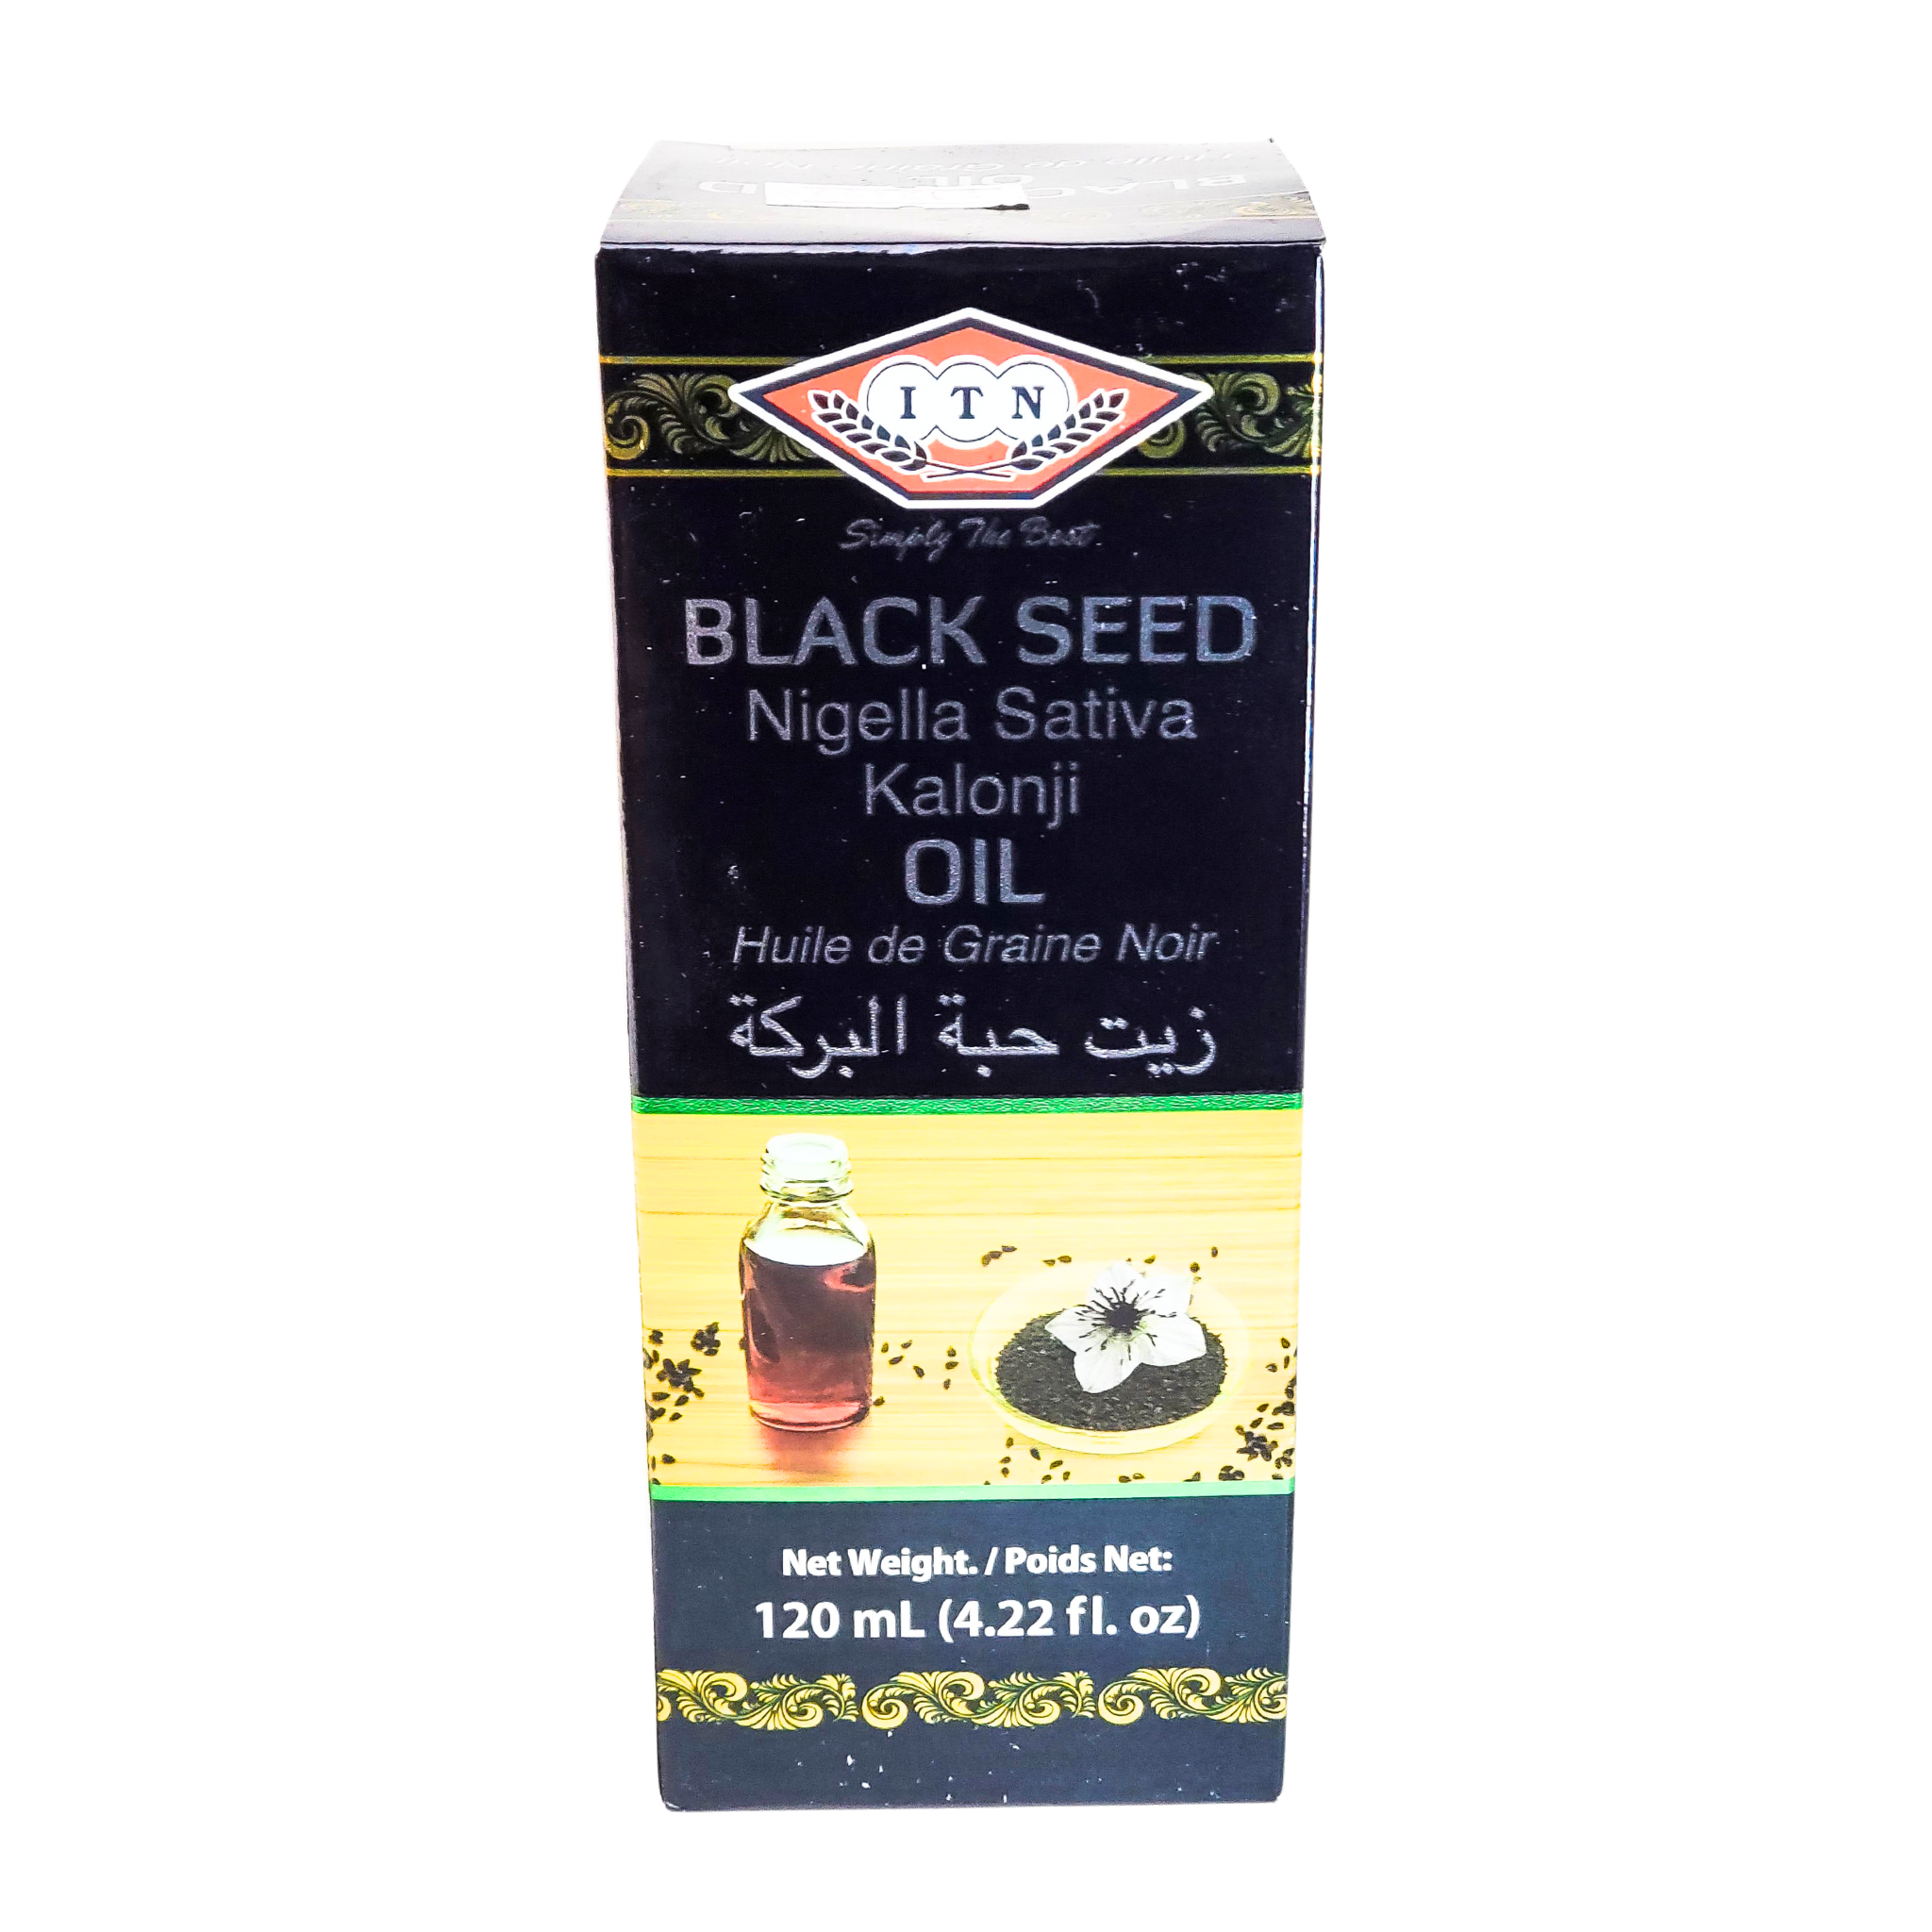 ITN Black Seed Nigella Sativa Oil 120 ml